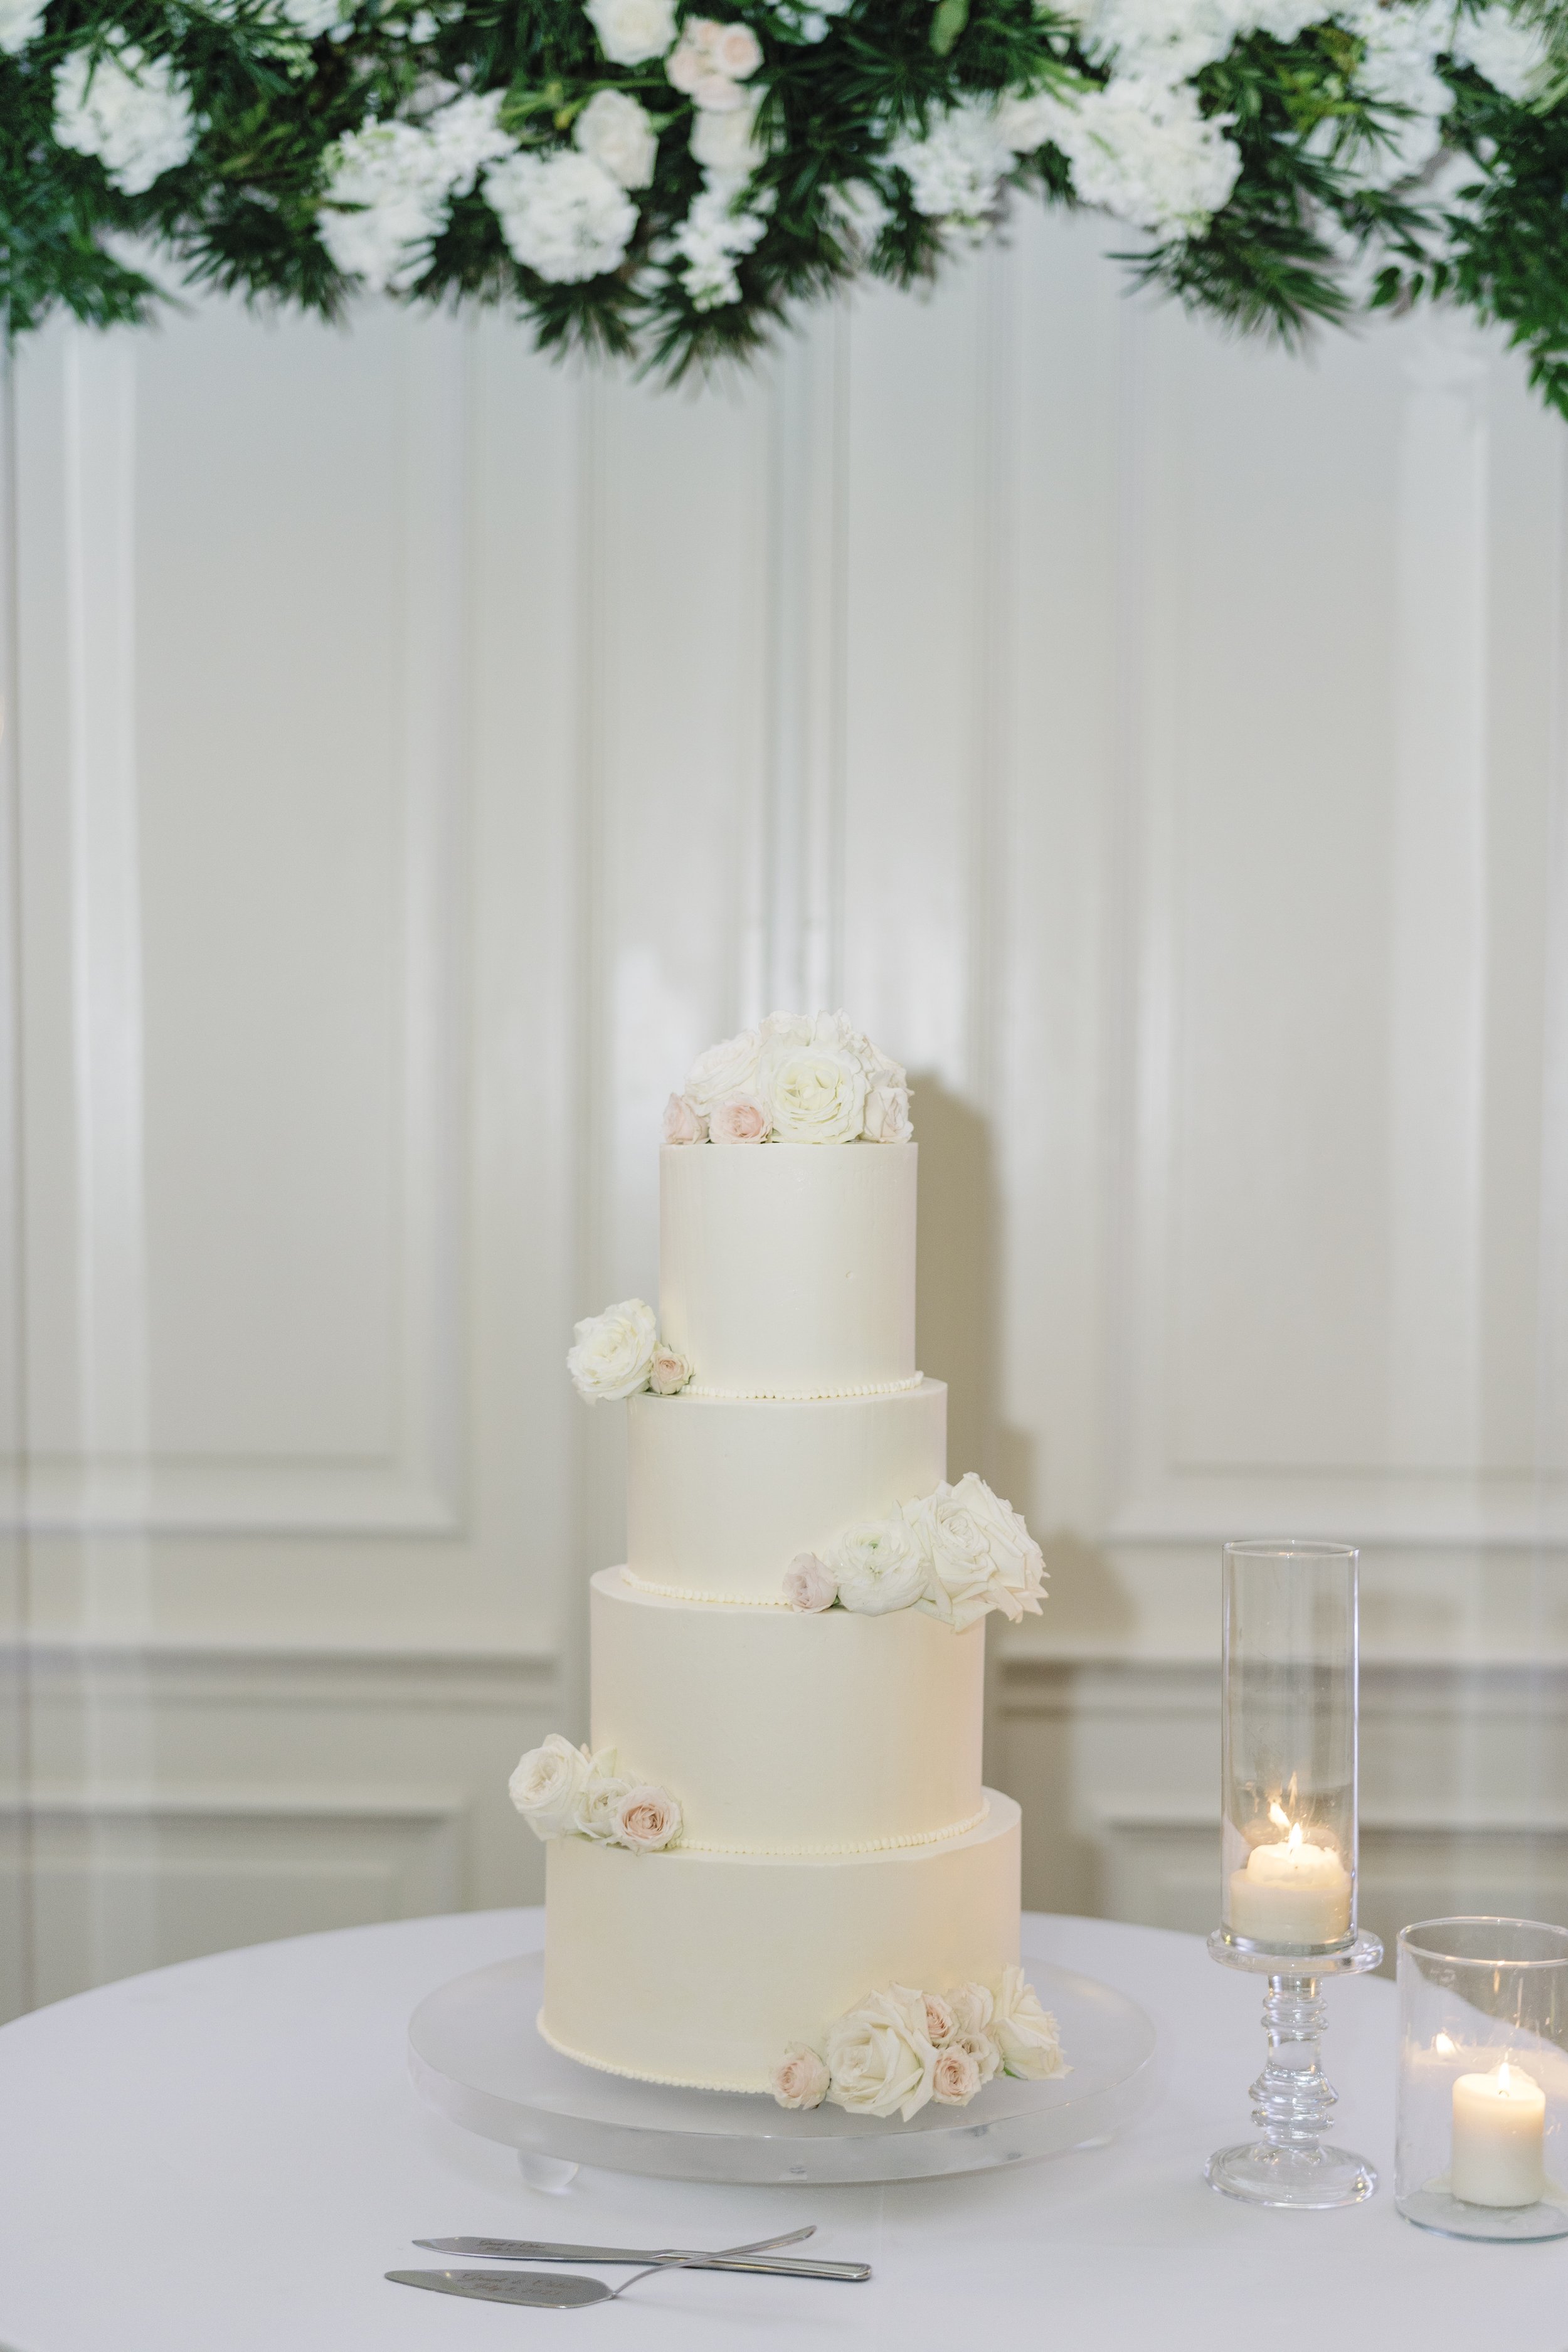 wedding cake at the ritz carlton hotel in amelia island wedding photographer .jpg